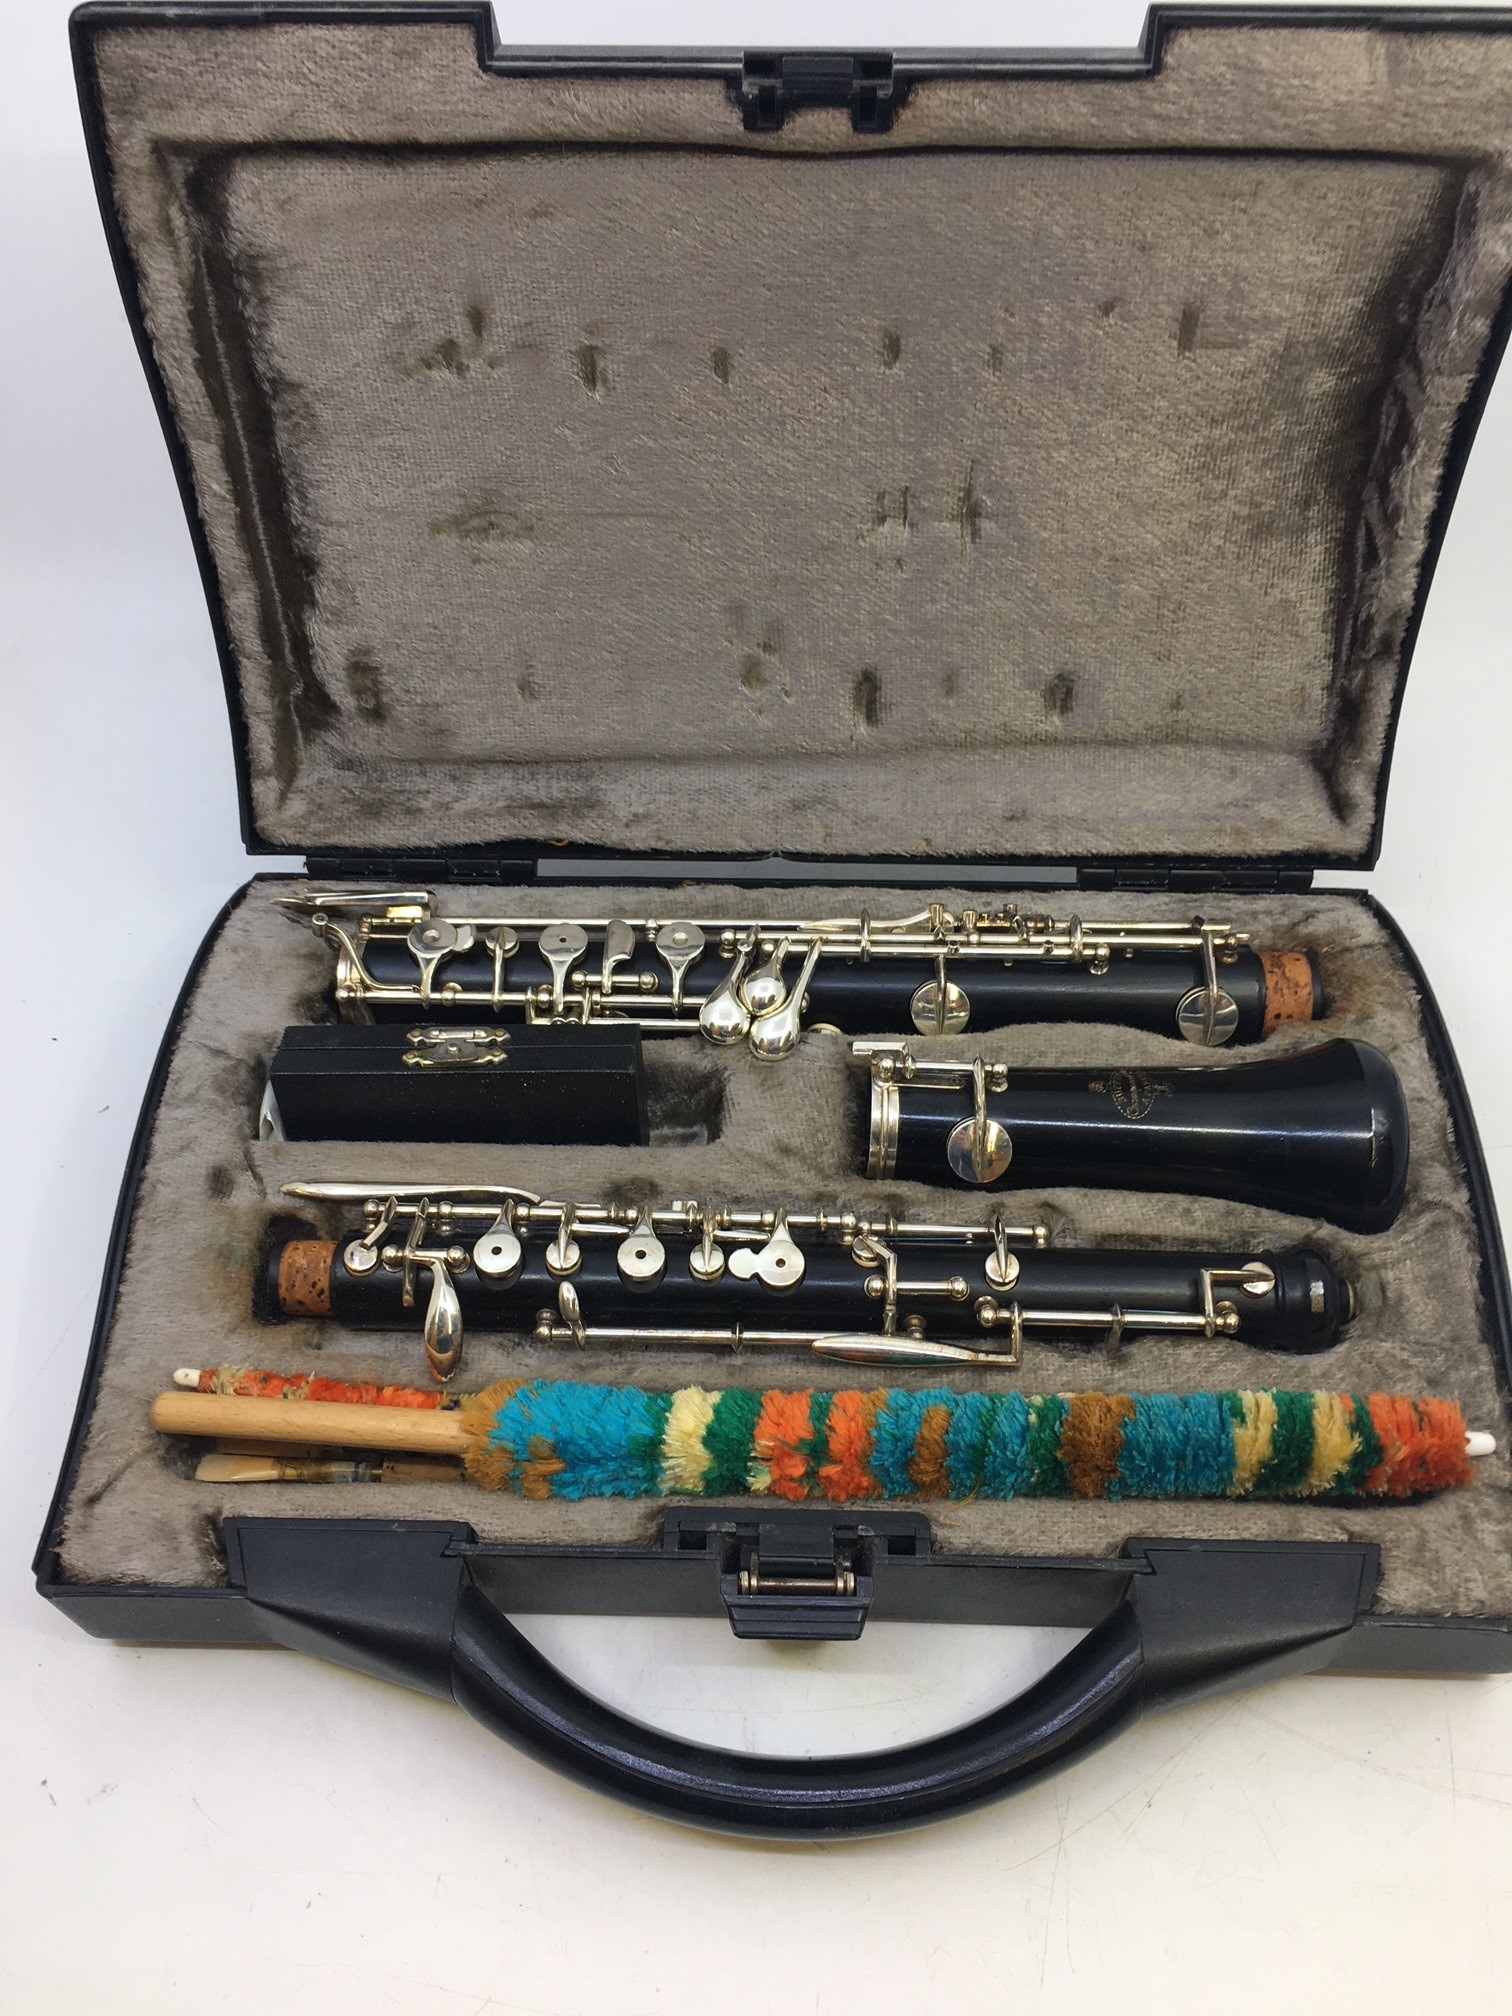 A Buffet Crampon10908 oboe in original fitted case.